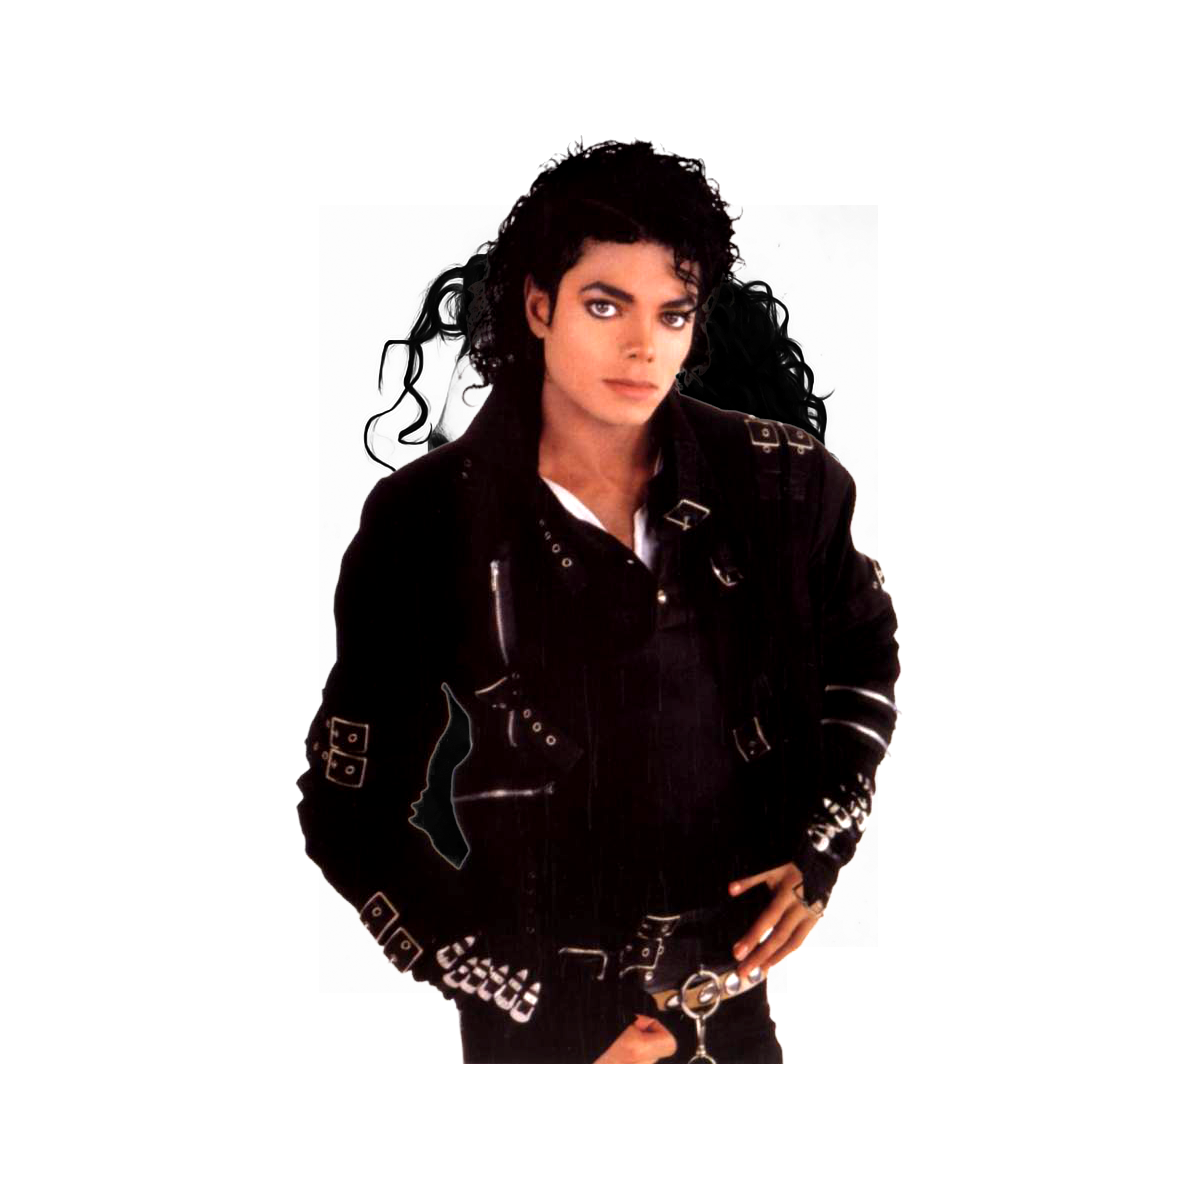  ZNANI i LUBIANI - Michael-Jackson14.png